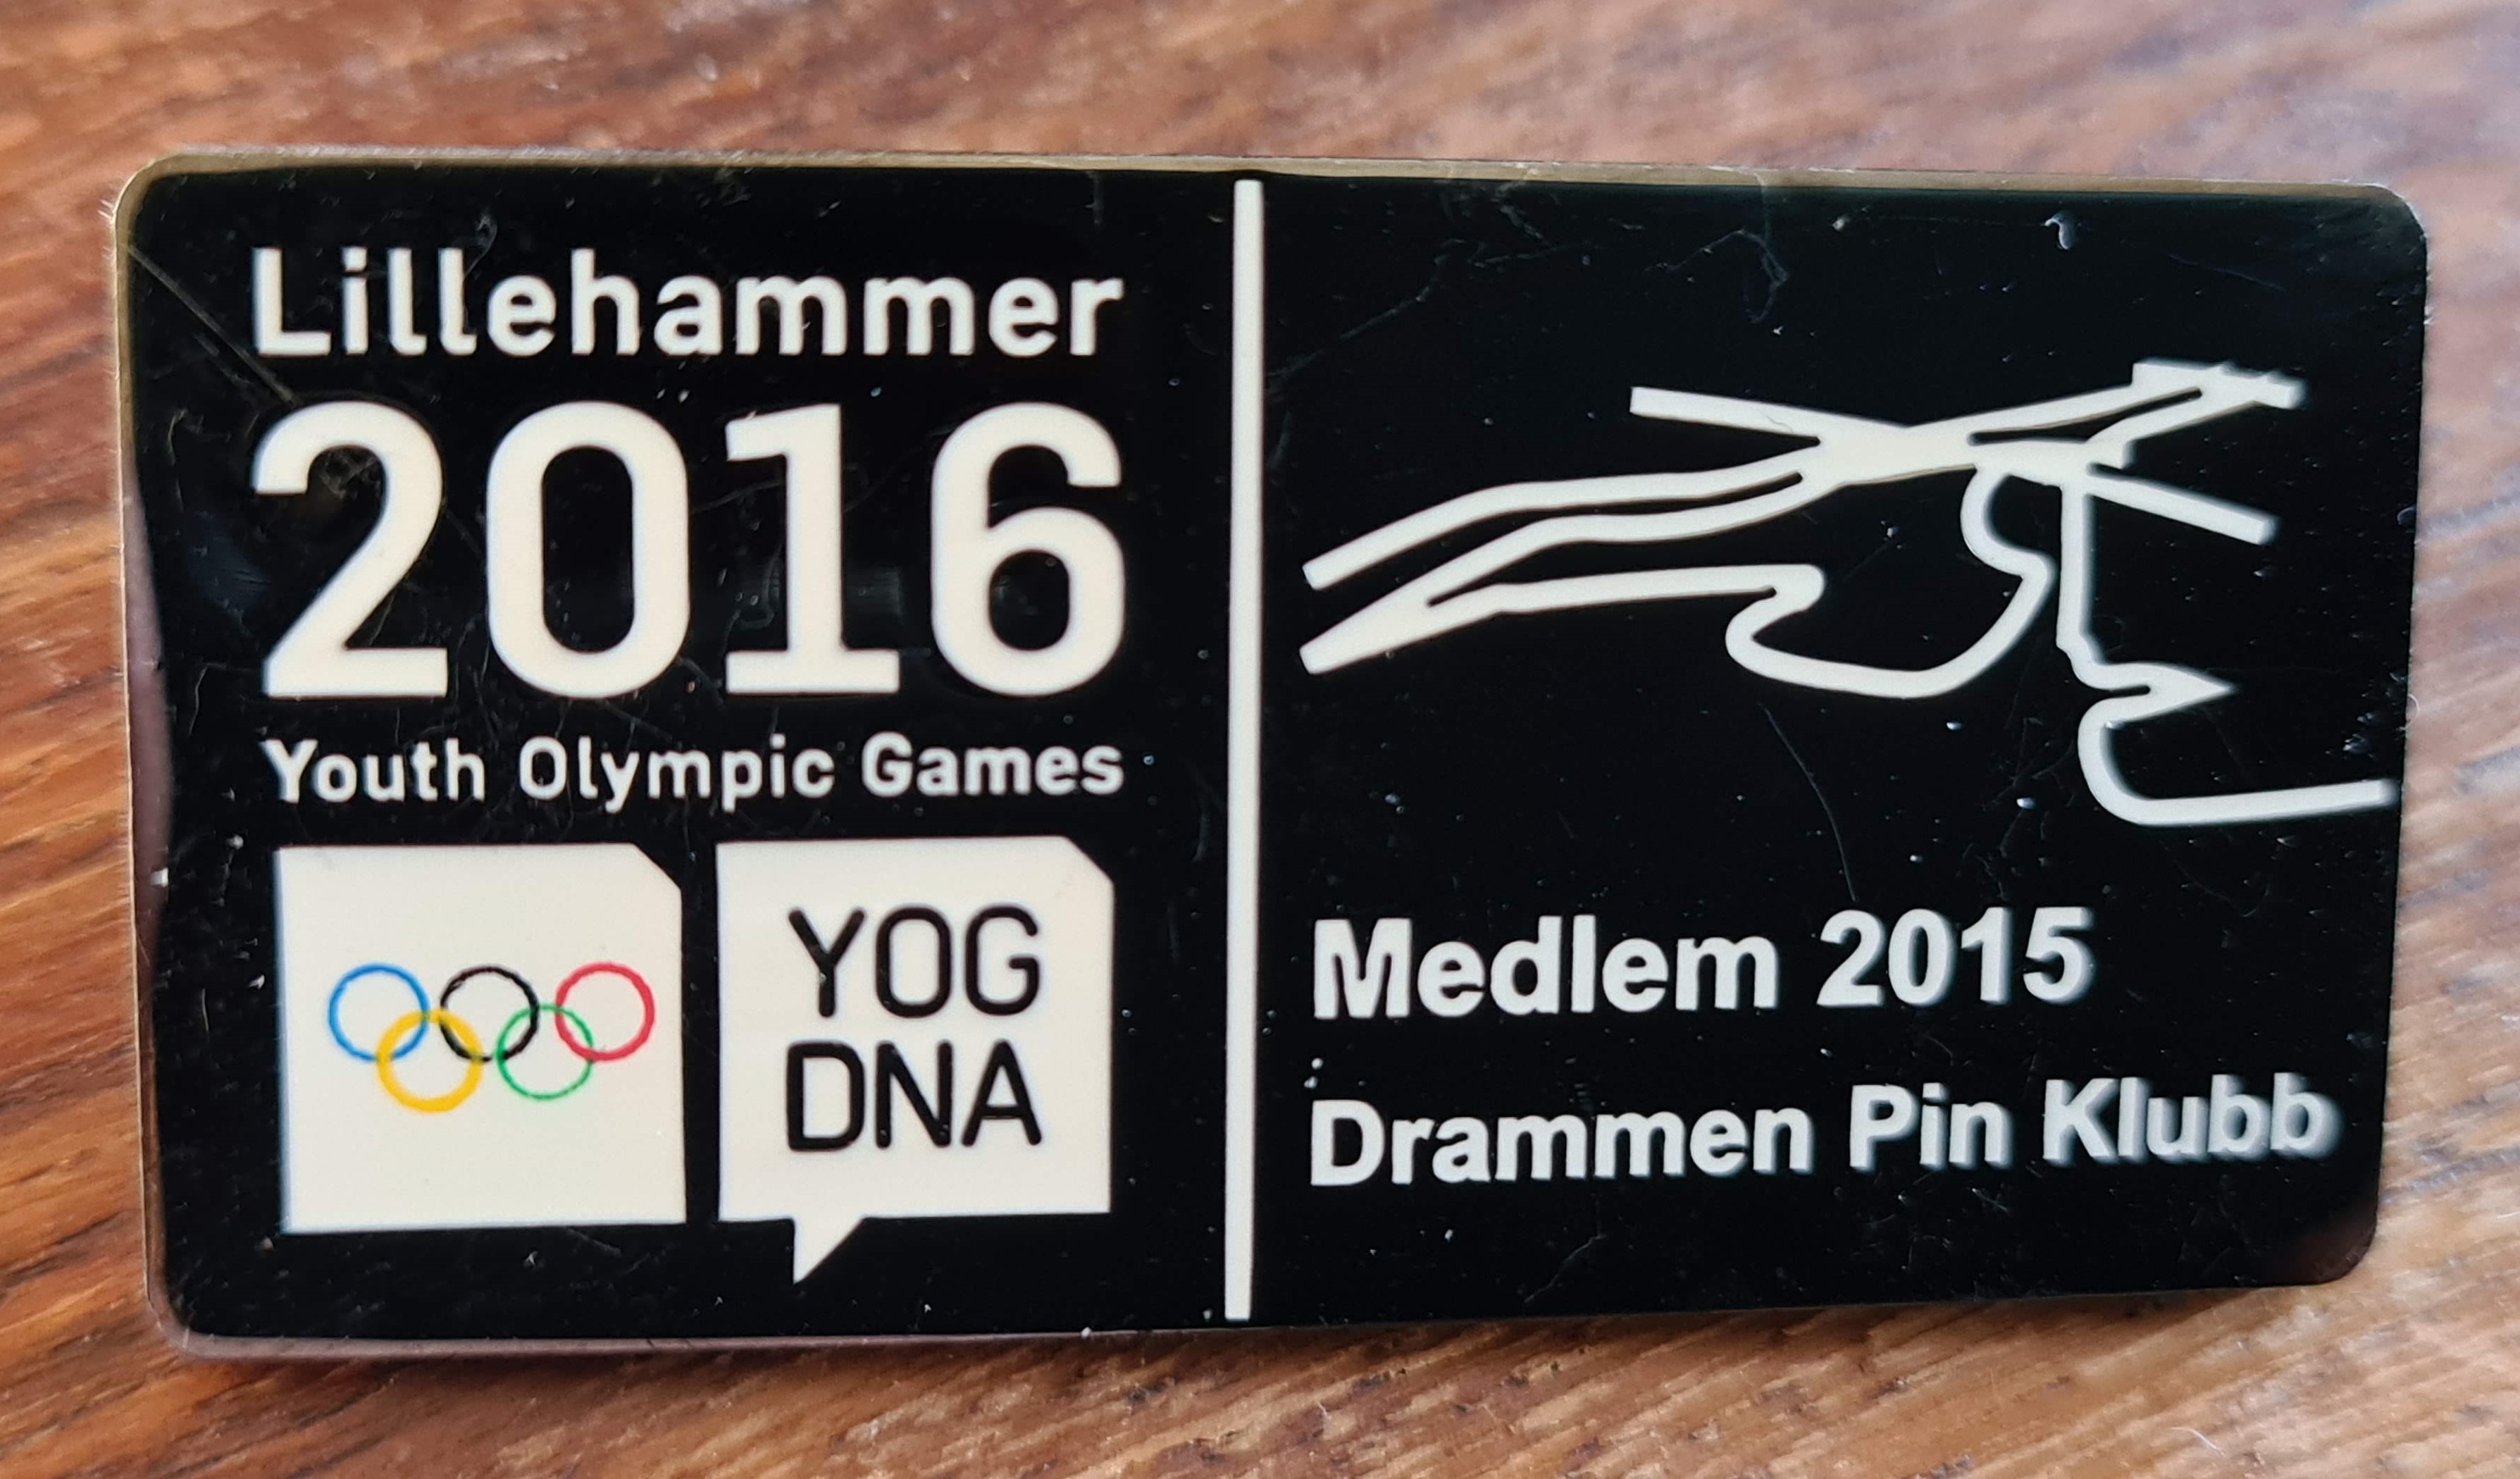 Ungdoms OL 2016 Lillehammer Drammen Pinsklubb 2015 nummerert